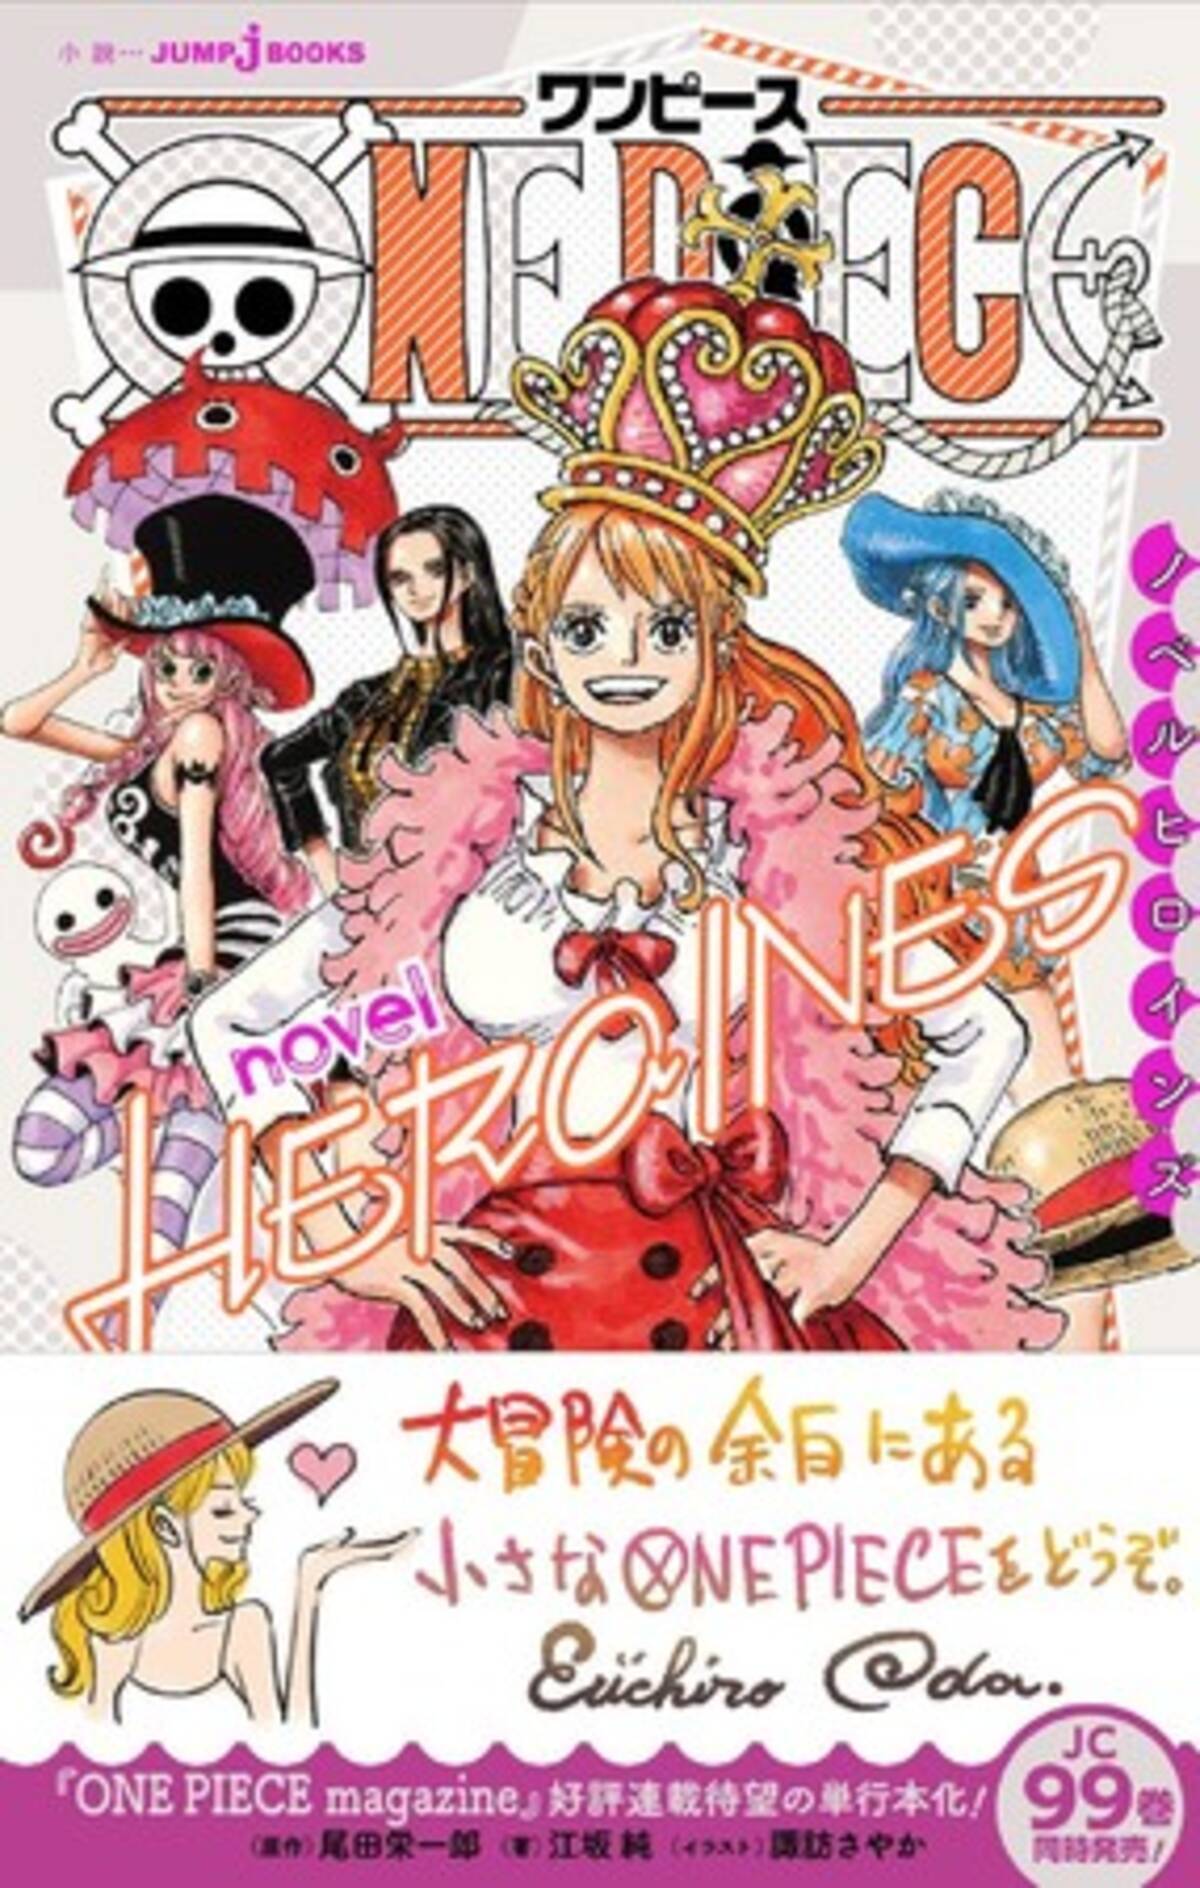 One Piece Novel Heroines がjump ｊ Booksより6月4日発売決定 漫画本編で描かれていない 人気ヒロインの短編小説集 21年4月16日 エキサイトニュース 2 3